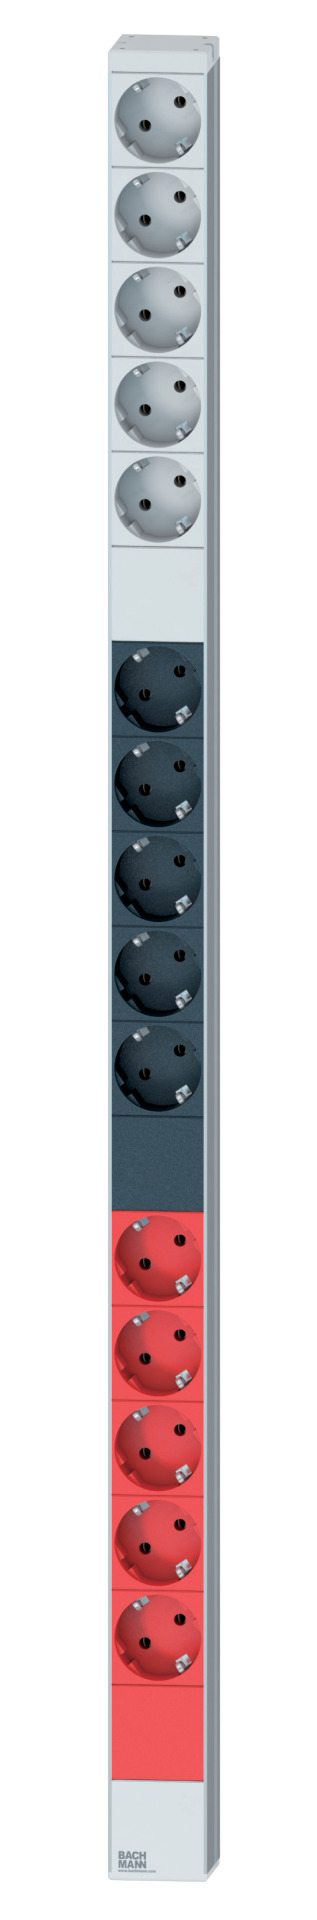 Steckdosenleiste vertikal 15 x Schutzkontakt, 3-phasig, Stecker CEE 16 A rot